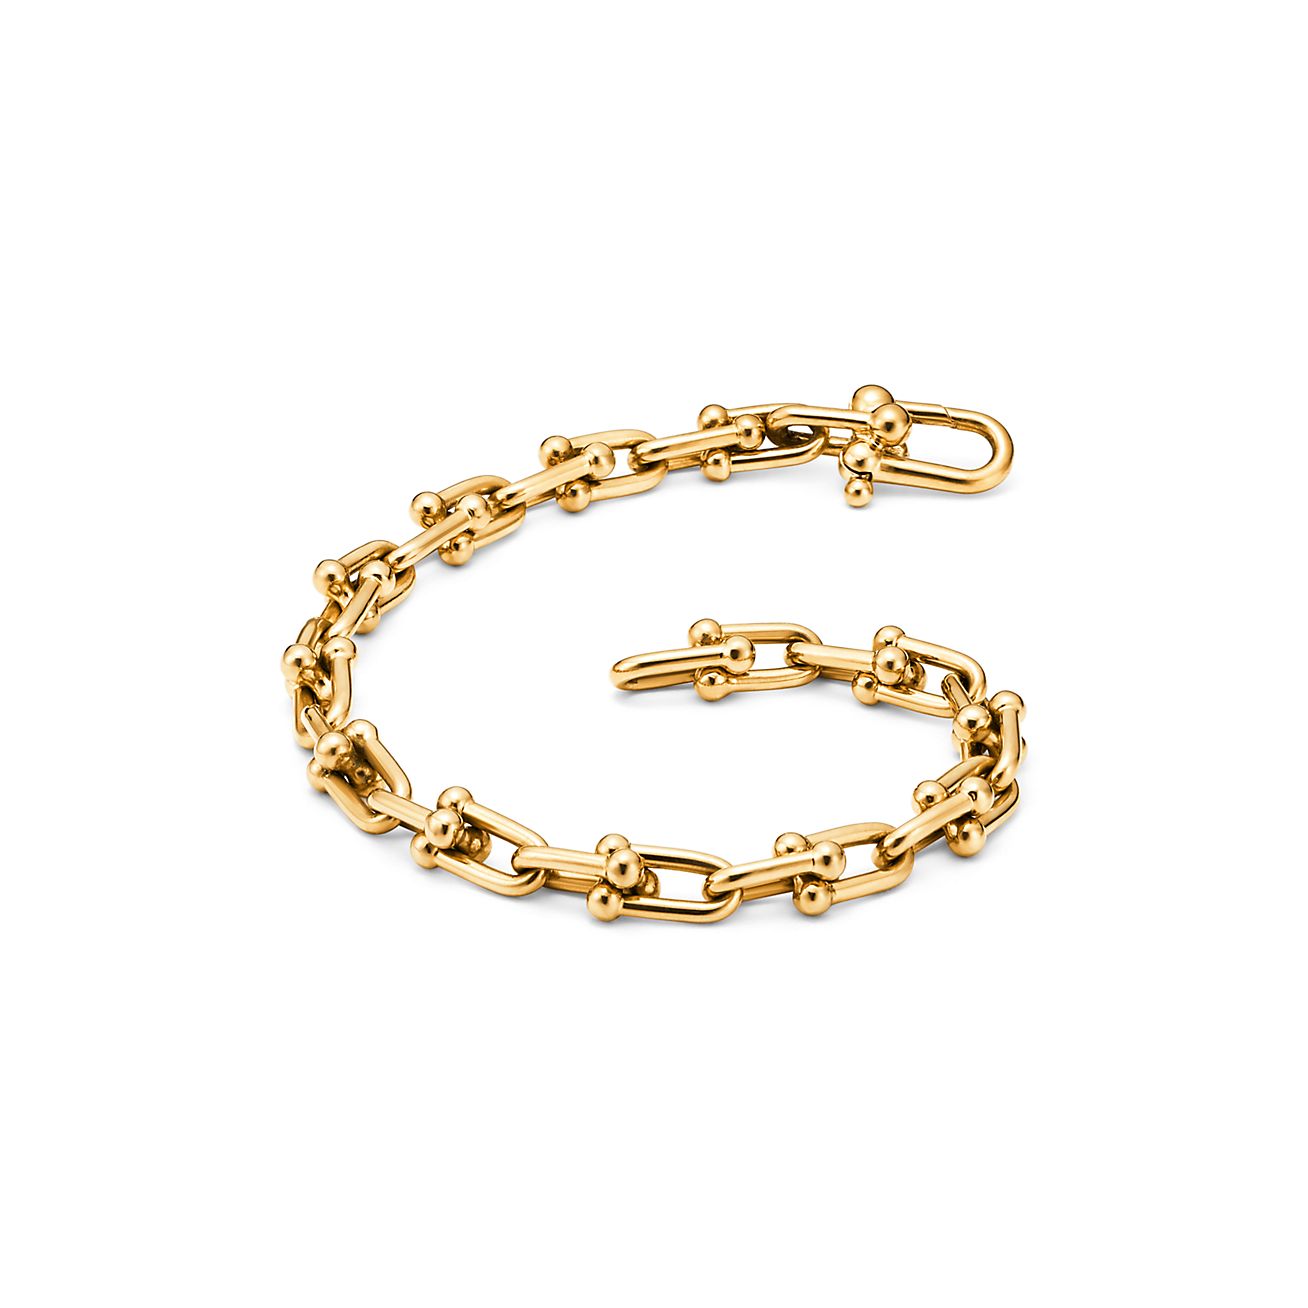 Gold 'Dogwood' Flower Bracelet, Tiffany and Co. Beekman New York